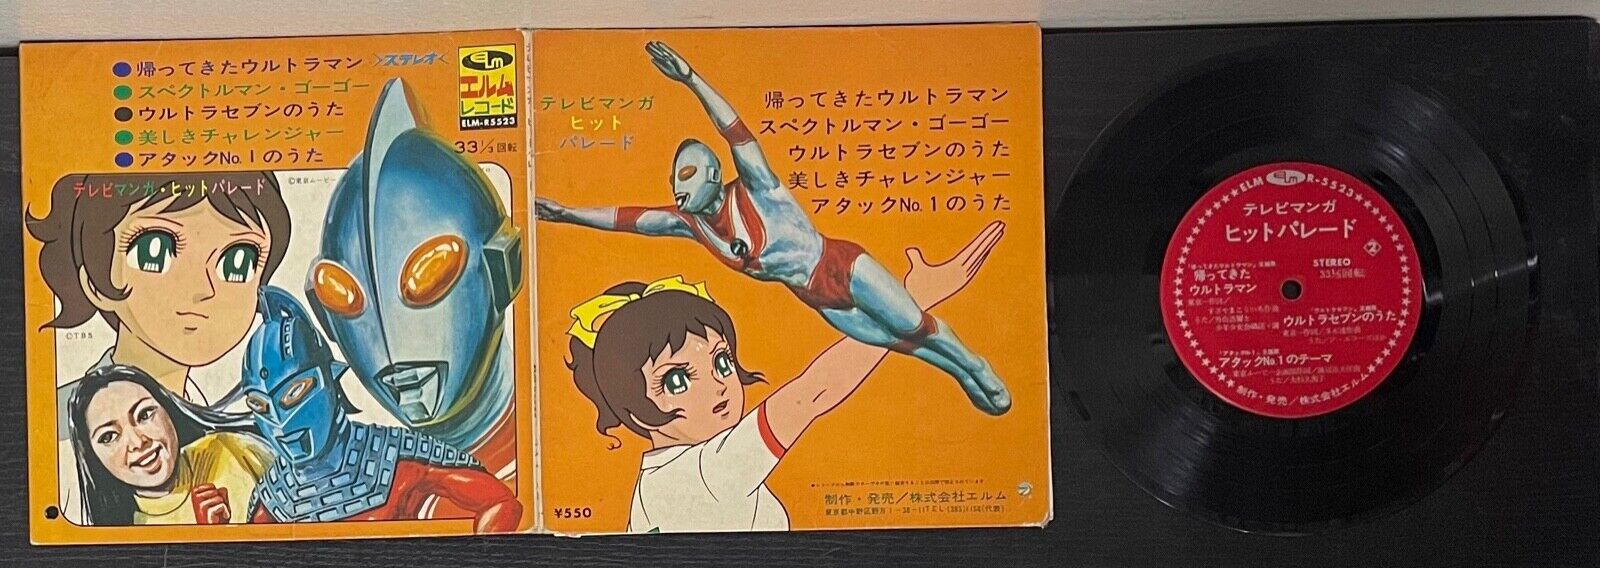 Ultraman Ep Japanese Animation Anime Manga Vinyl